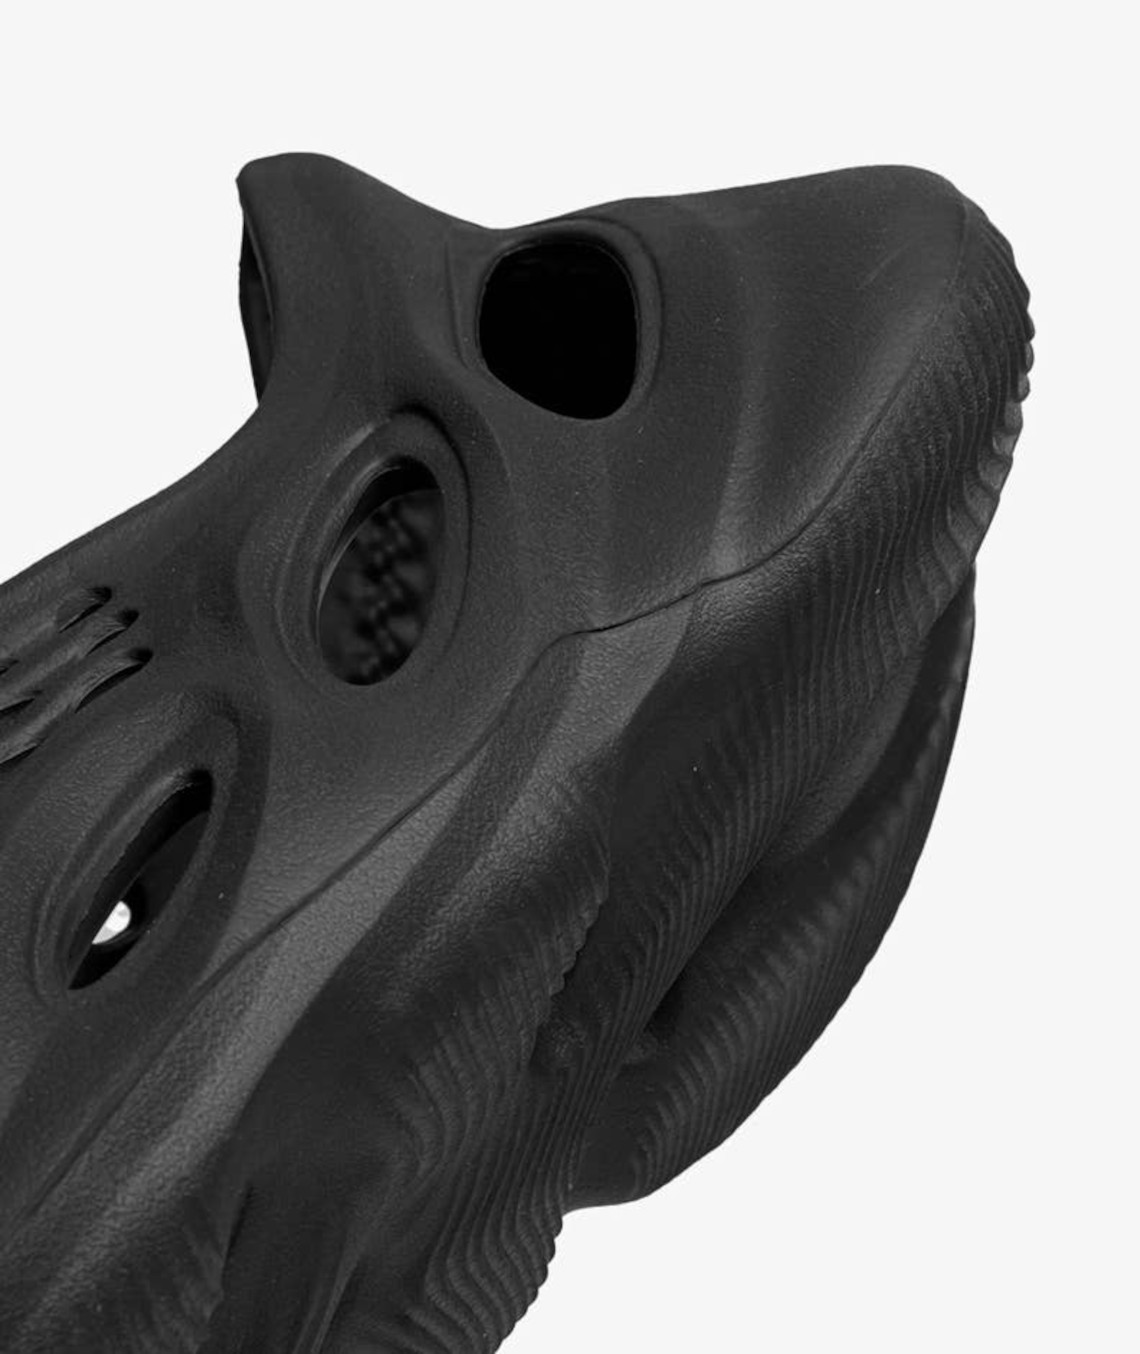 adidas Mens Yeezy Foam Runner HP8739 Onyx - Size 4